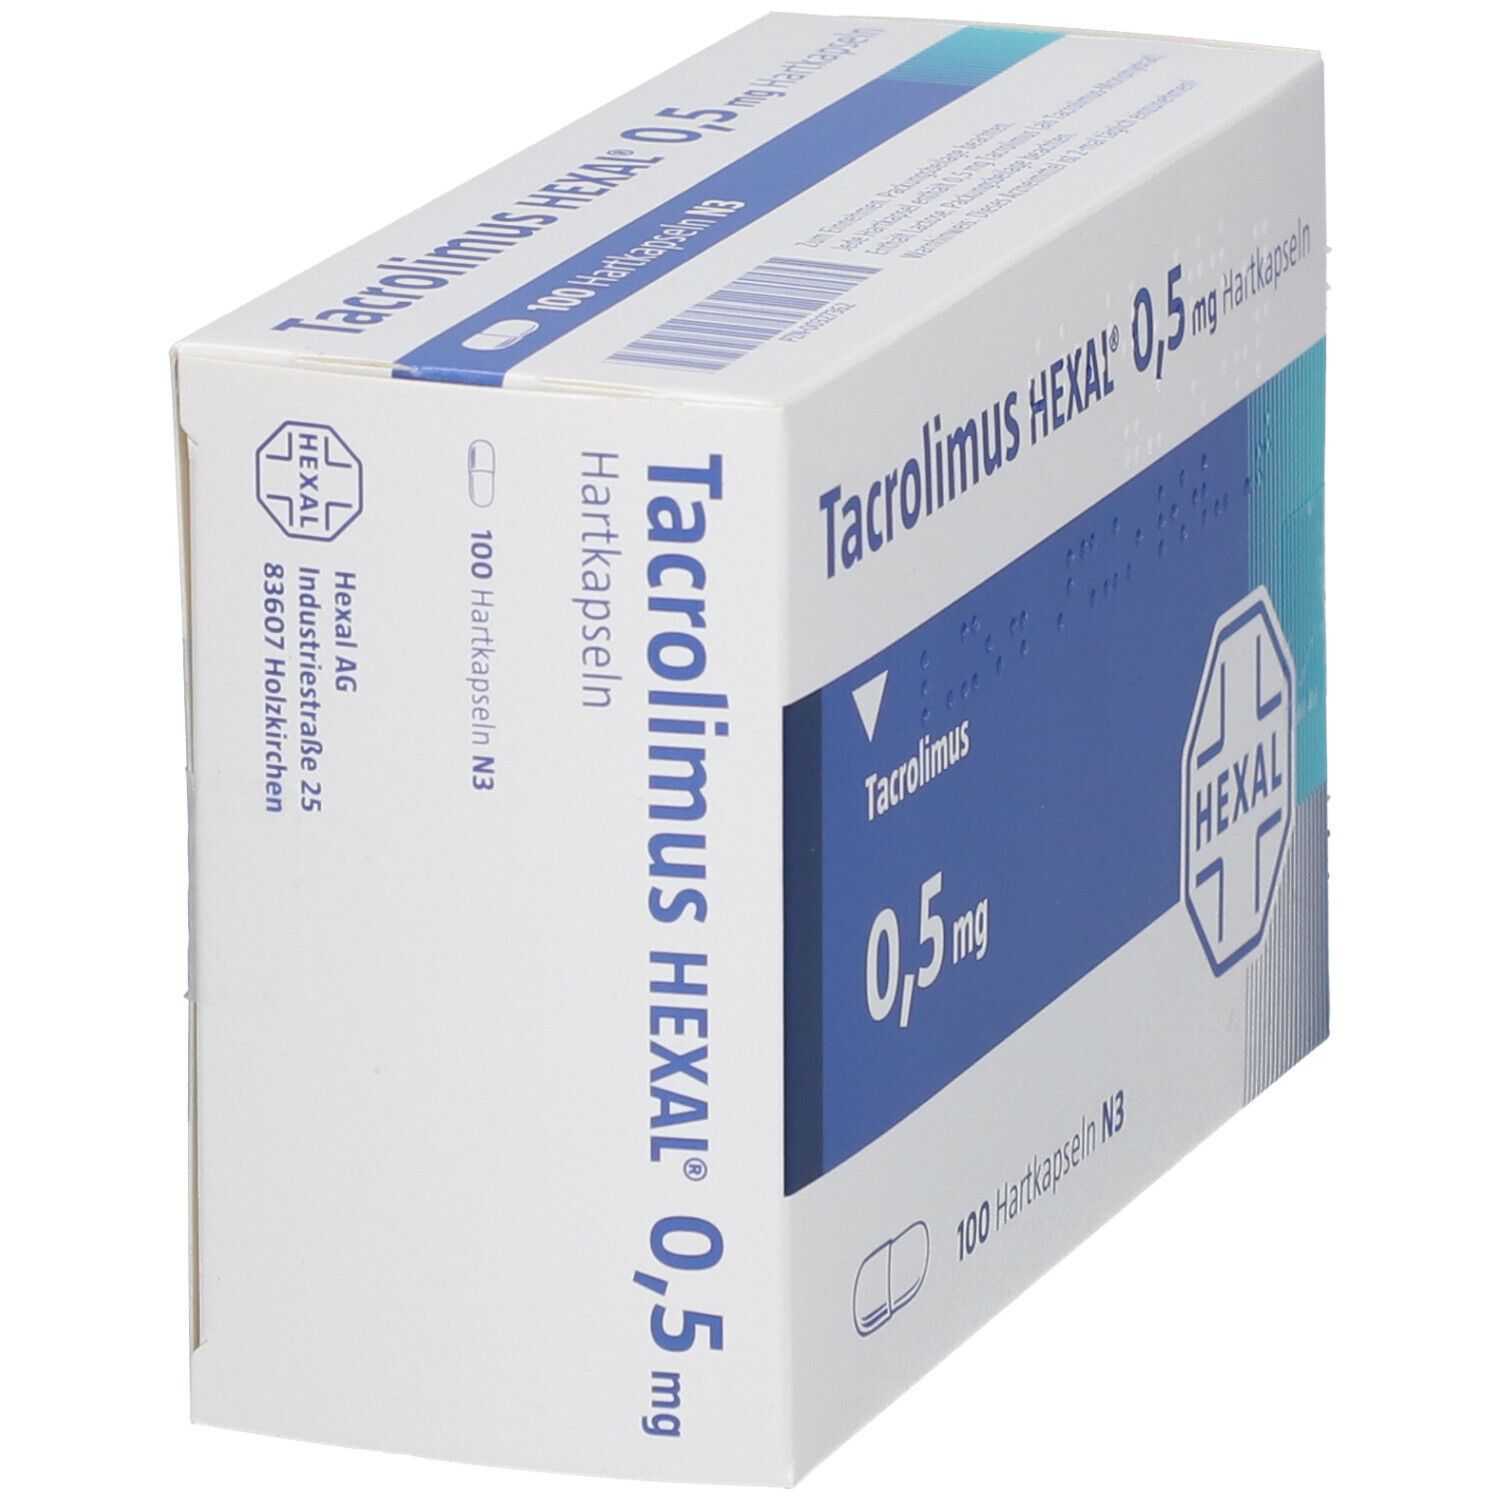 Tacrolimus HEXAL® 0,5 mg